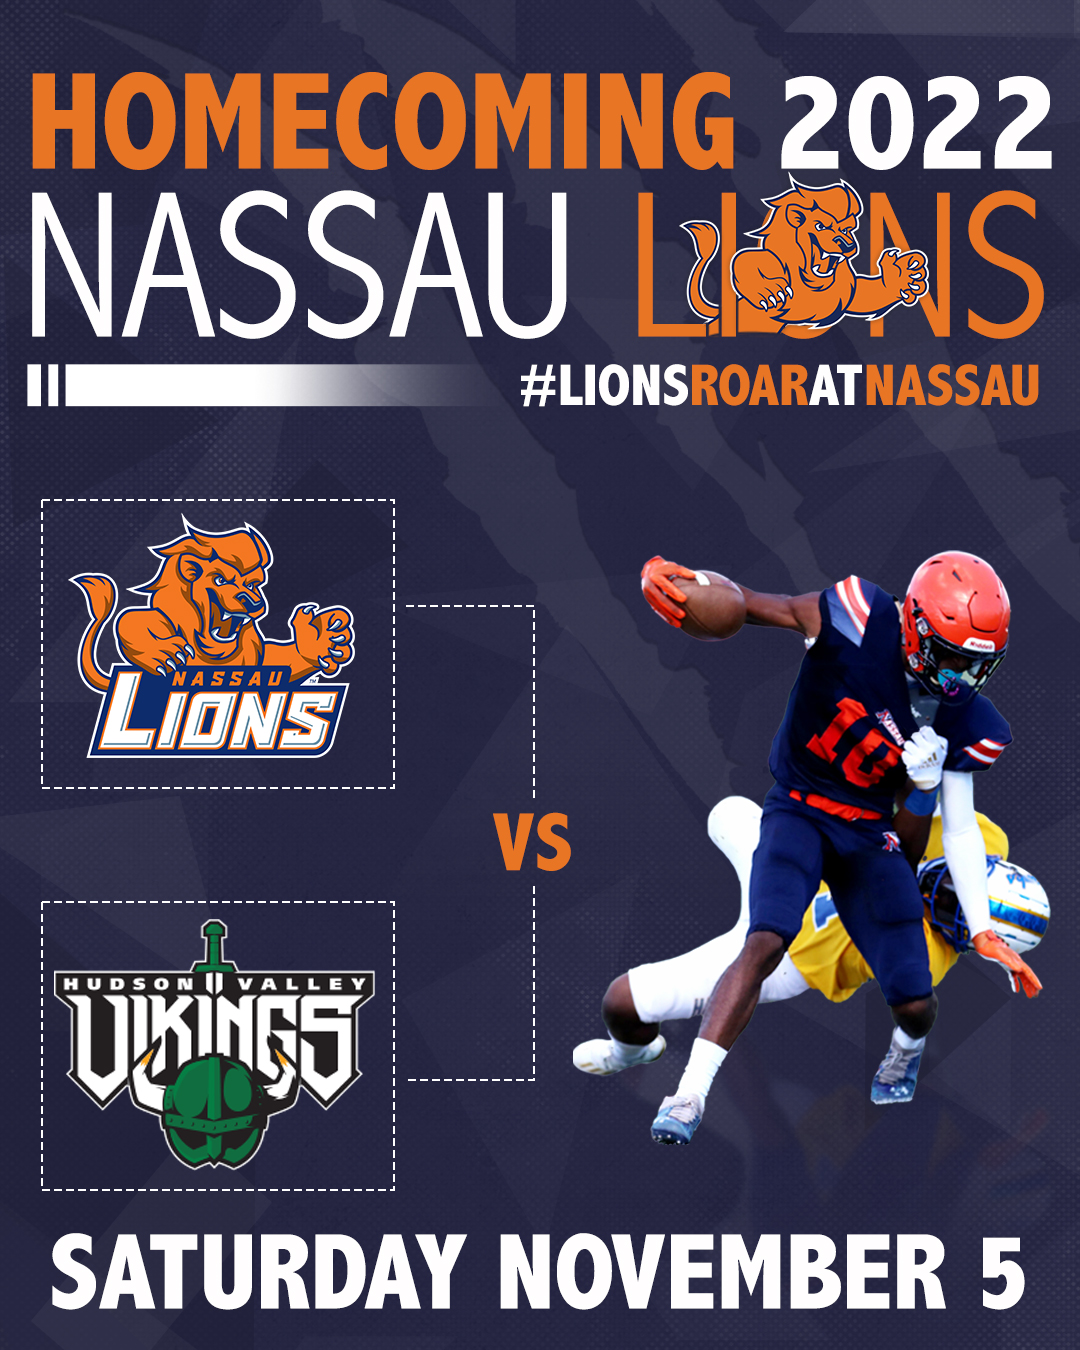 Homecoming 2022 Nassau Lions Saturday November 5